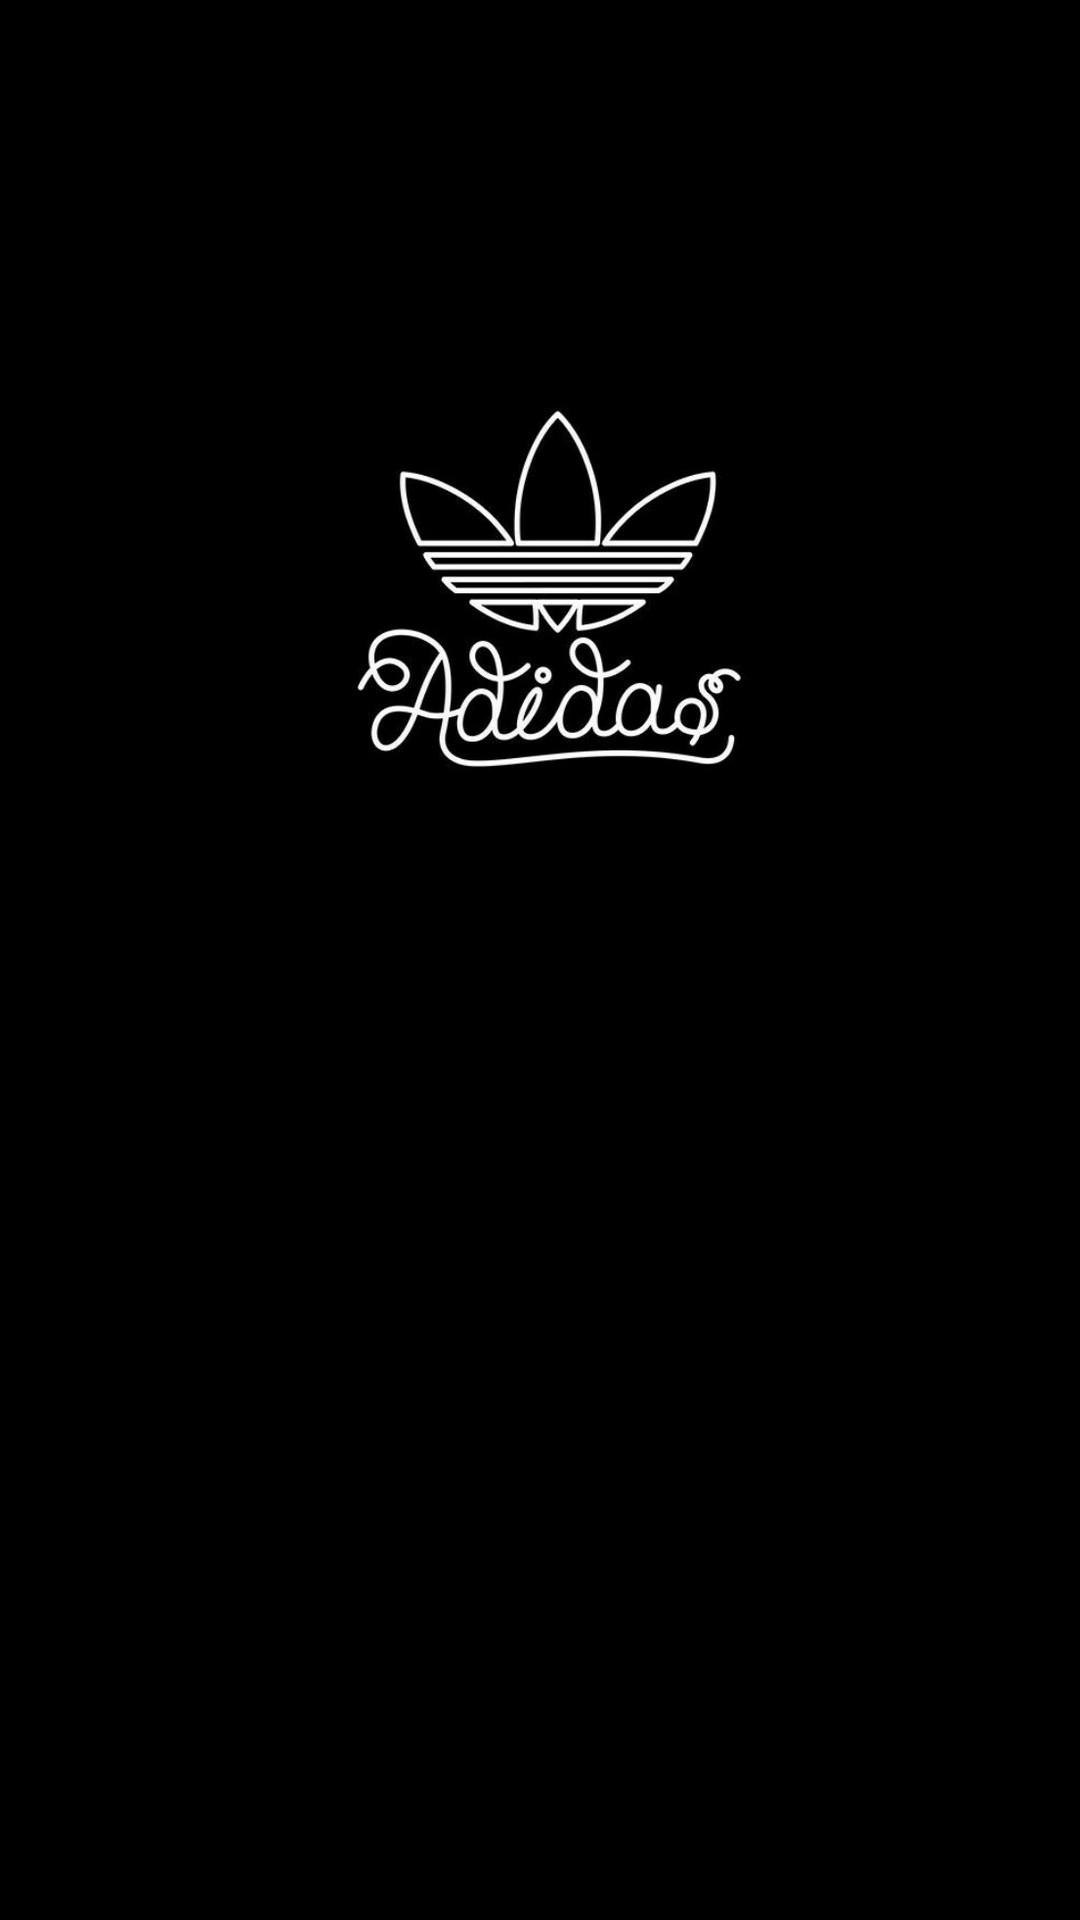 Wallpaper Android Adidas Logo Android Wallpaper